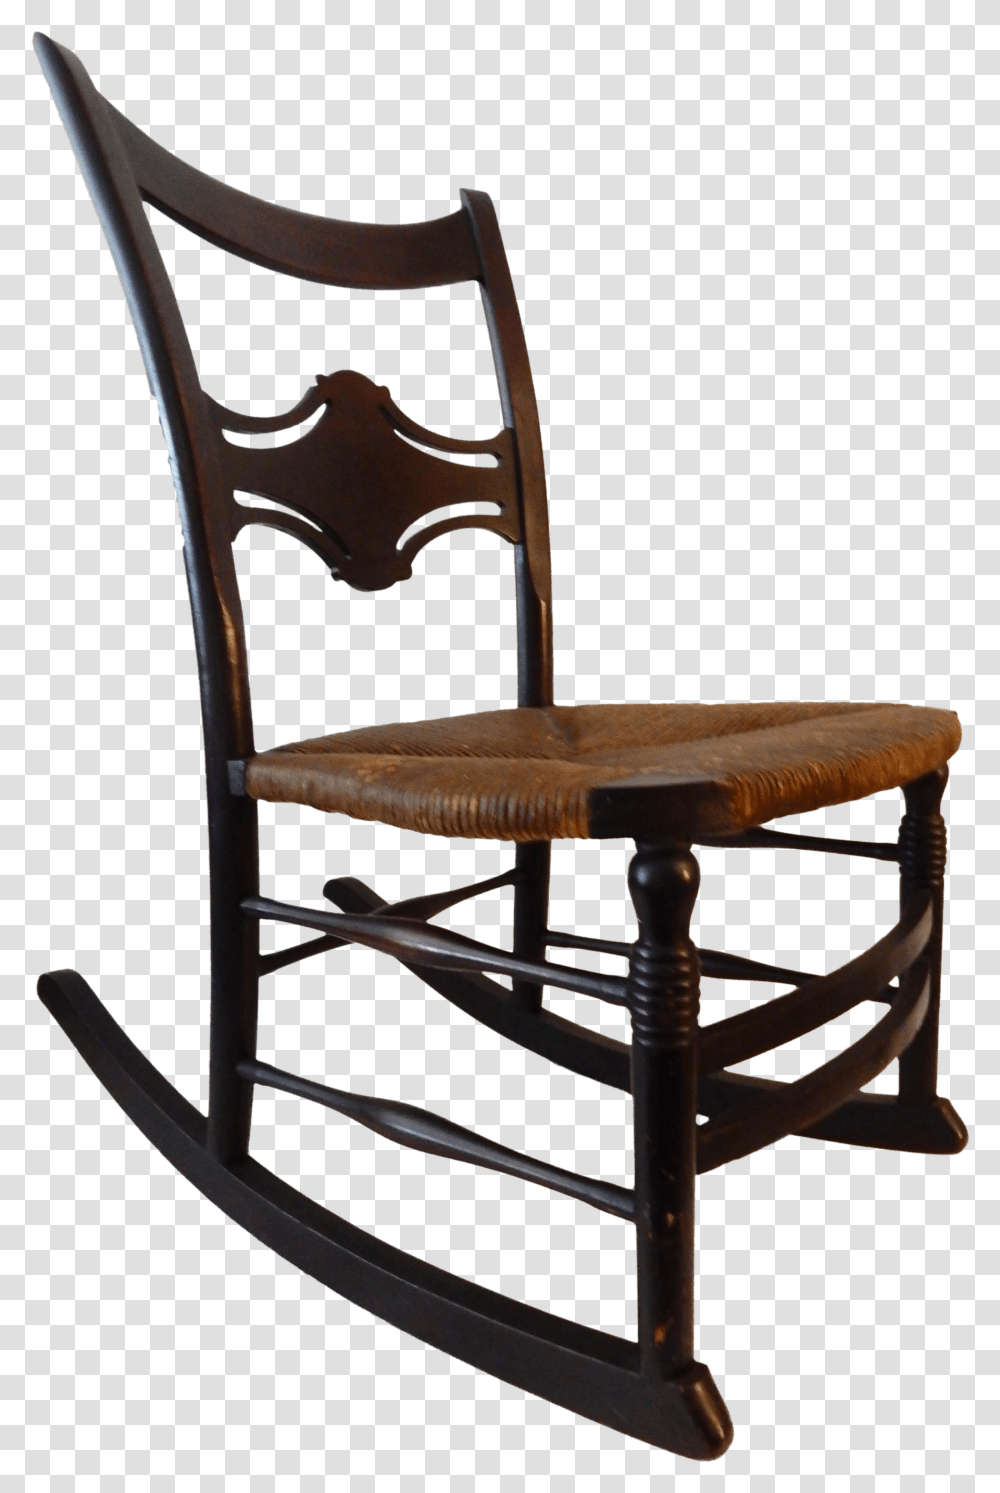 Beautiful Old Armless Rocking Chair Chairish Rh Chairish Armless Rocking Chair Transparent Png